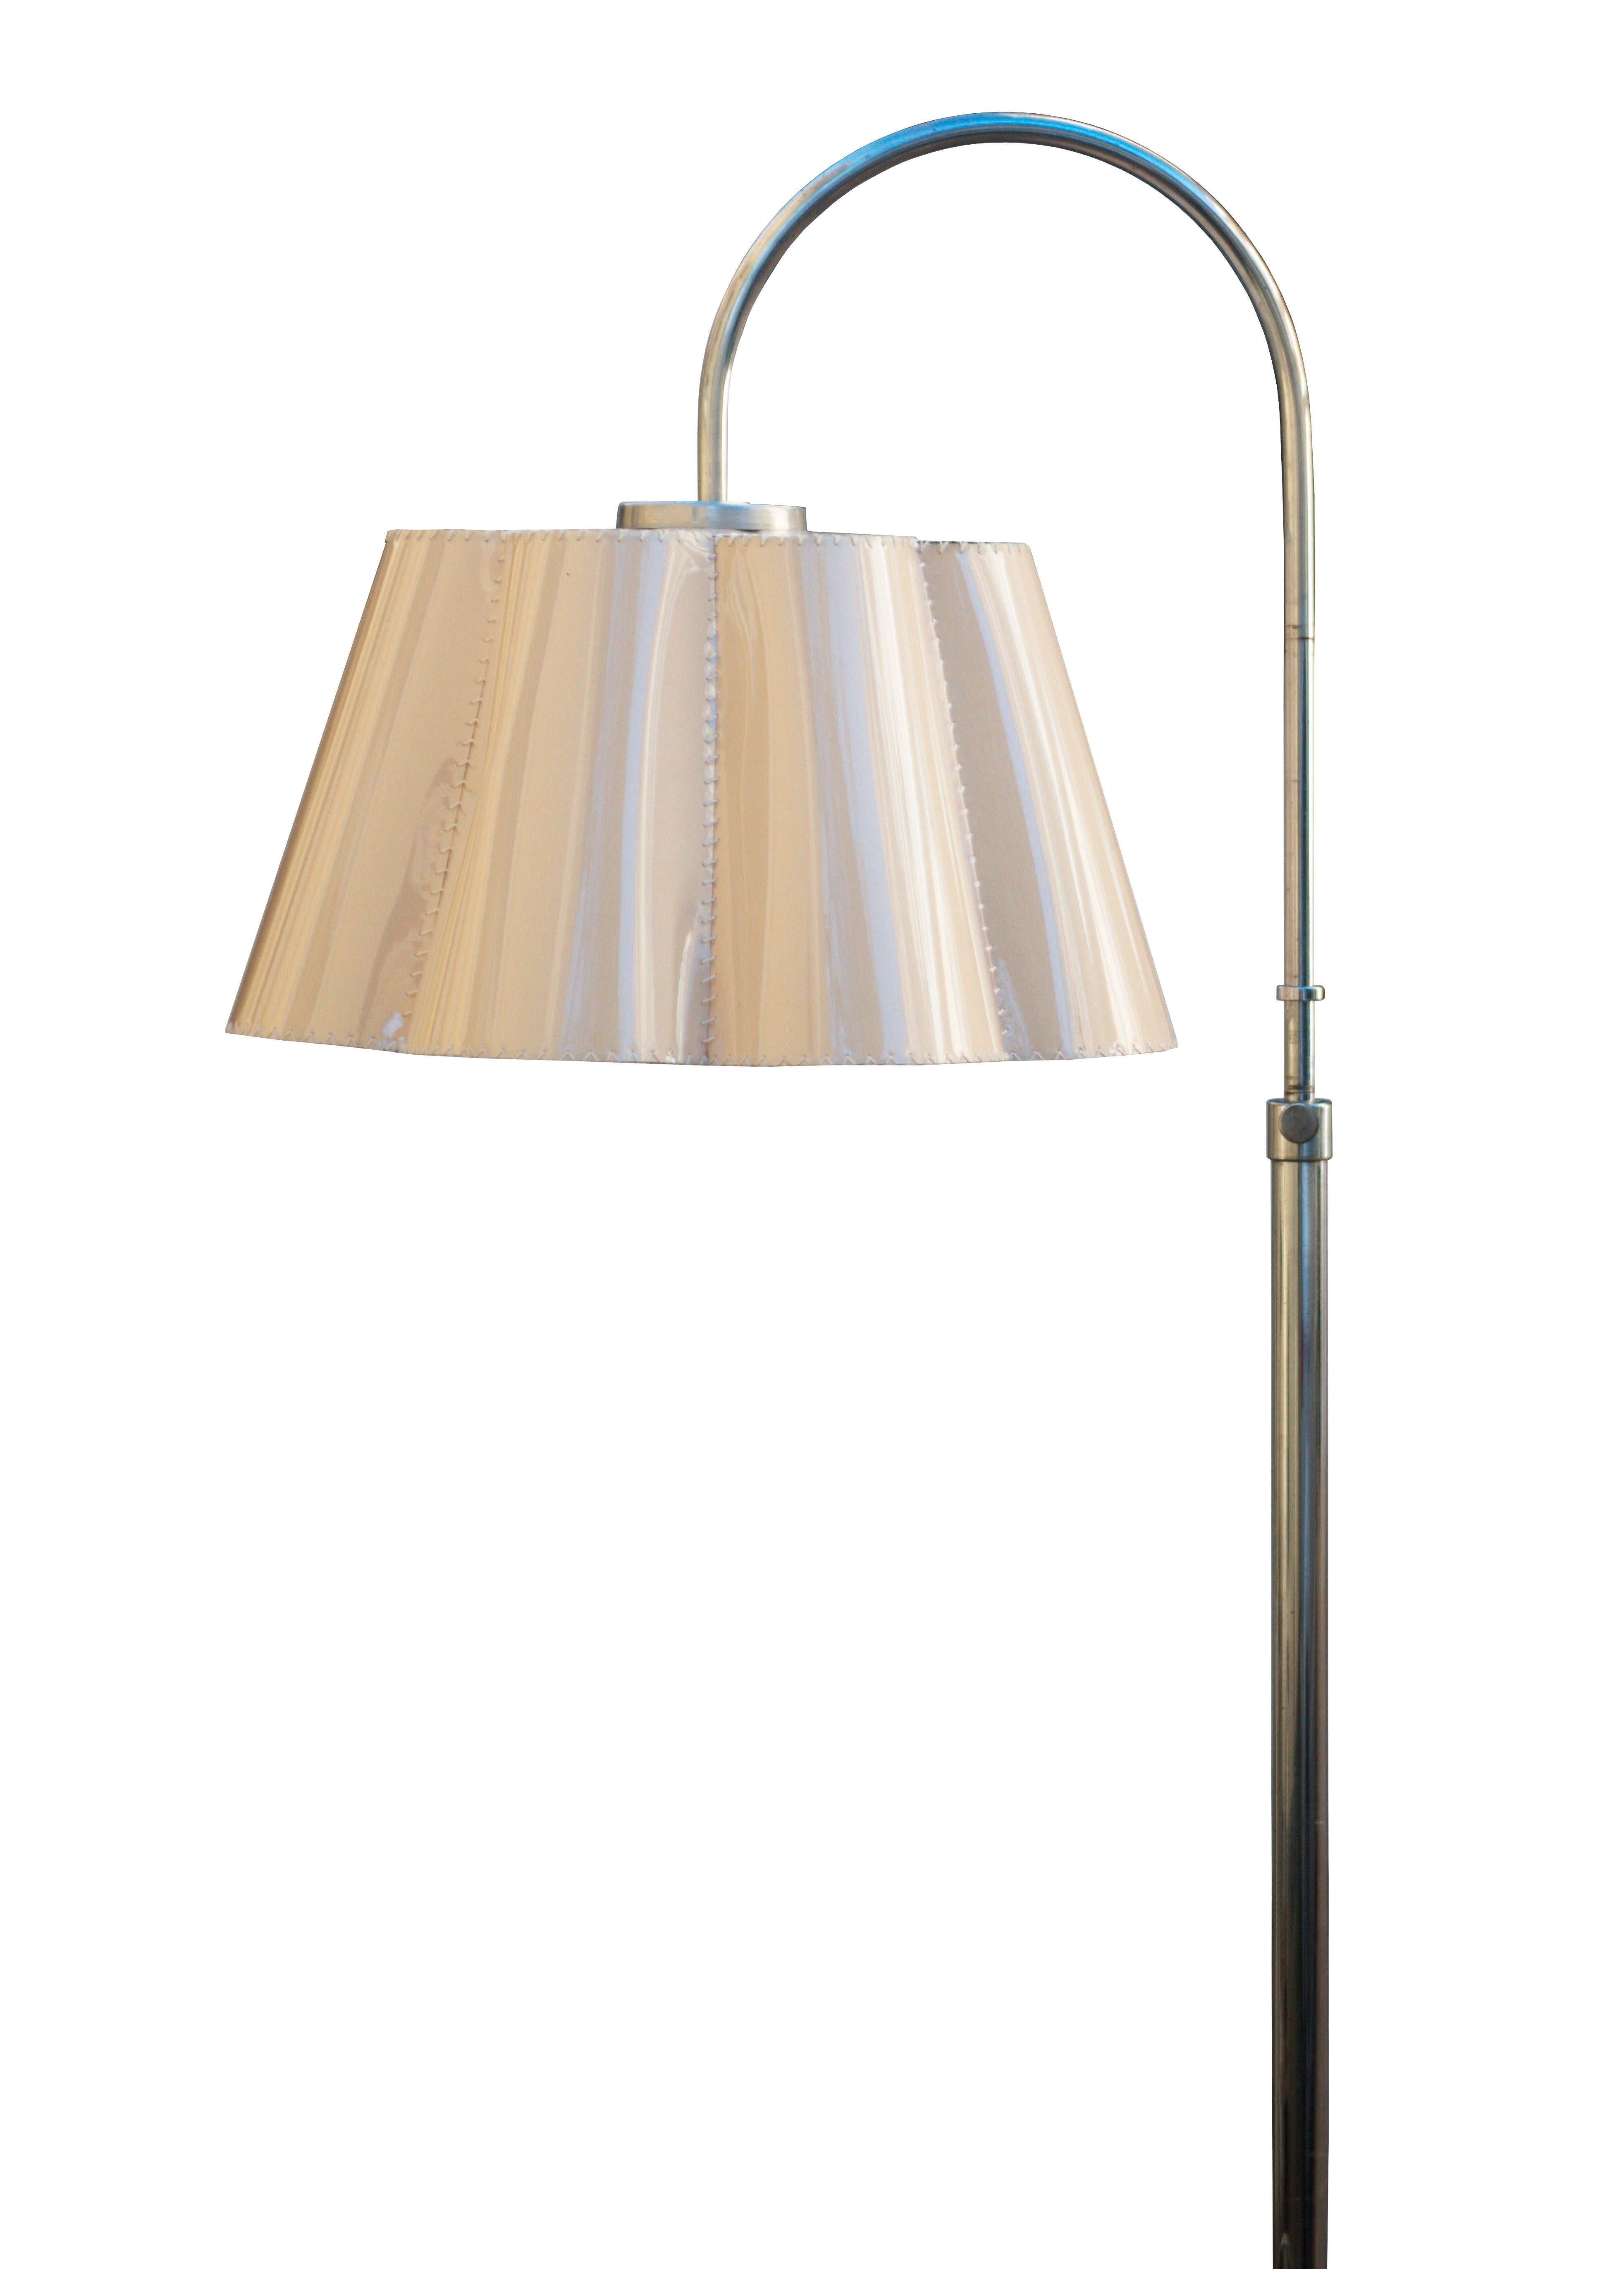 Bauhaus 1930's Modernist Floor Lamp For Sale